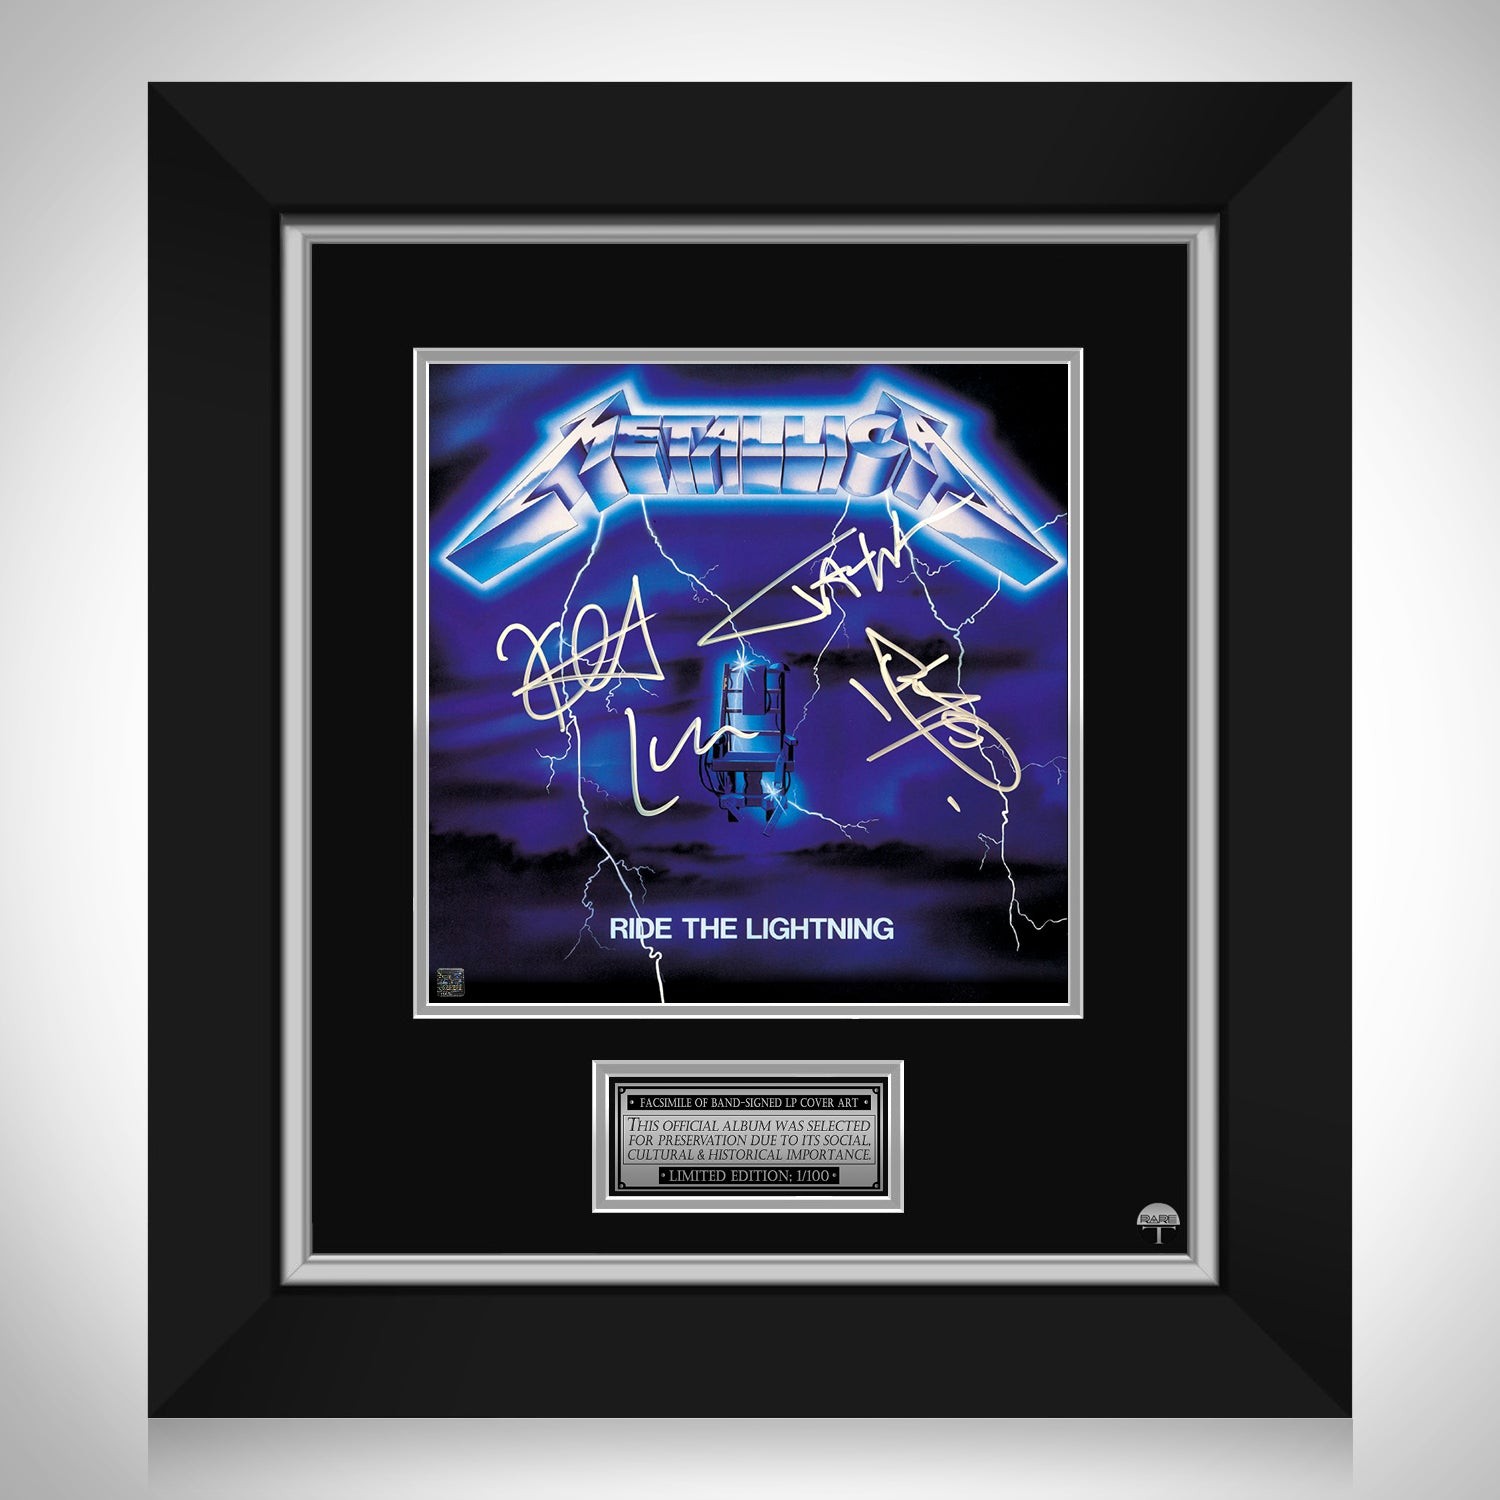 Metallica - Ride The Lightning Ltd. Electric Blue - Colored Vinyl